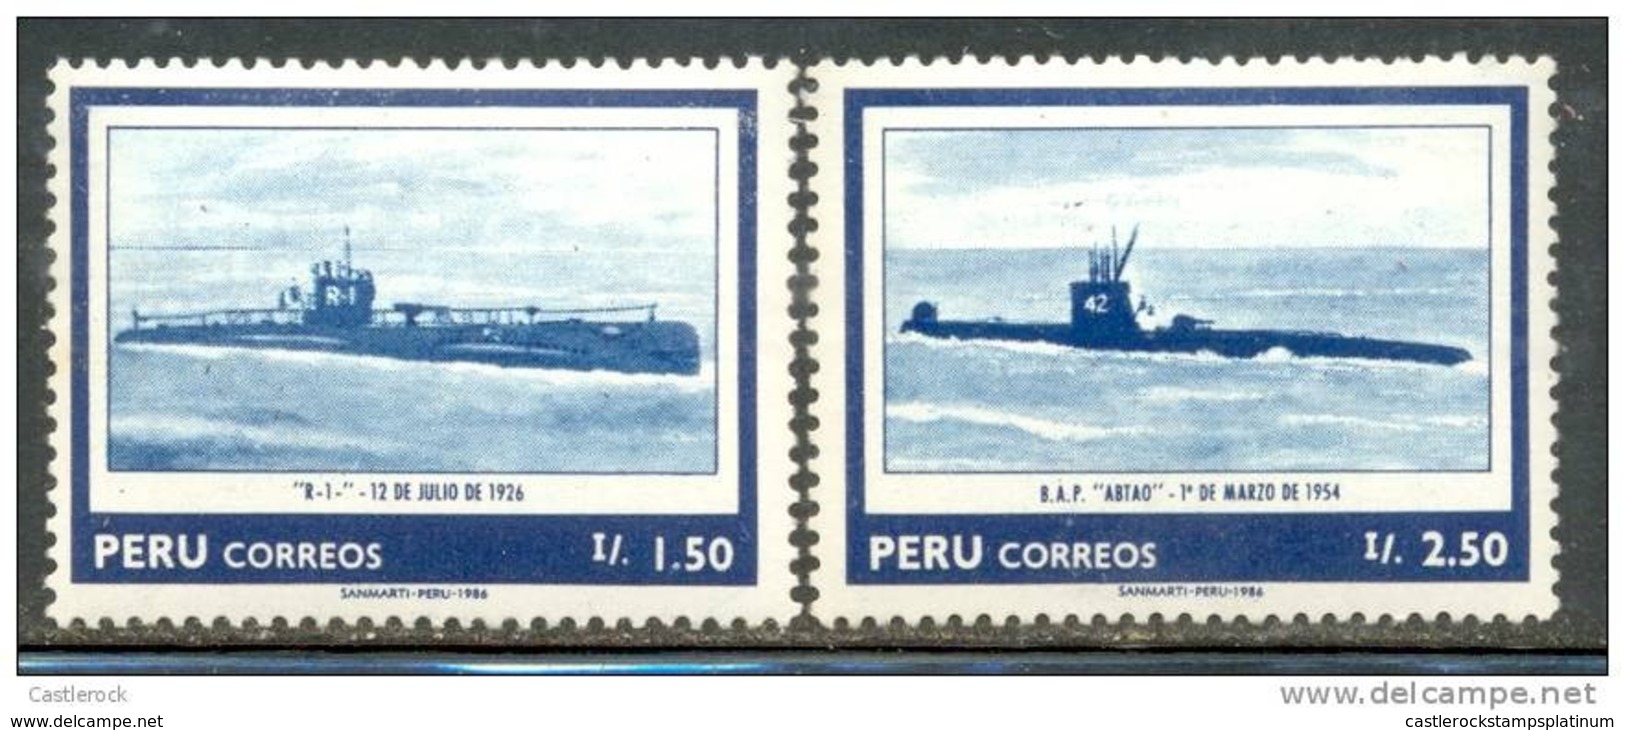 O) 1986 PERU, NAVY - 1.50i R-1 SC 873, 2.50i ABTAO SC 874 ( N) III- 2010 ), MNH - Perù